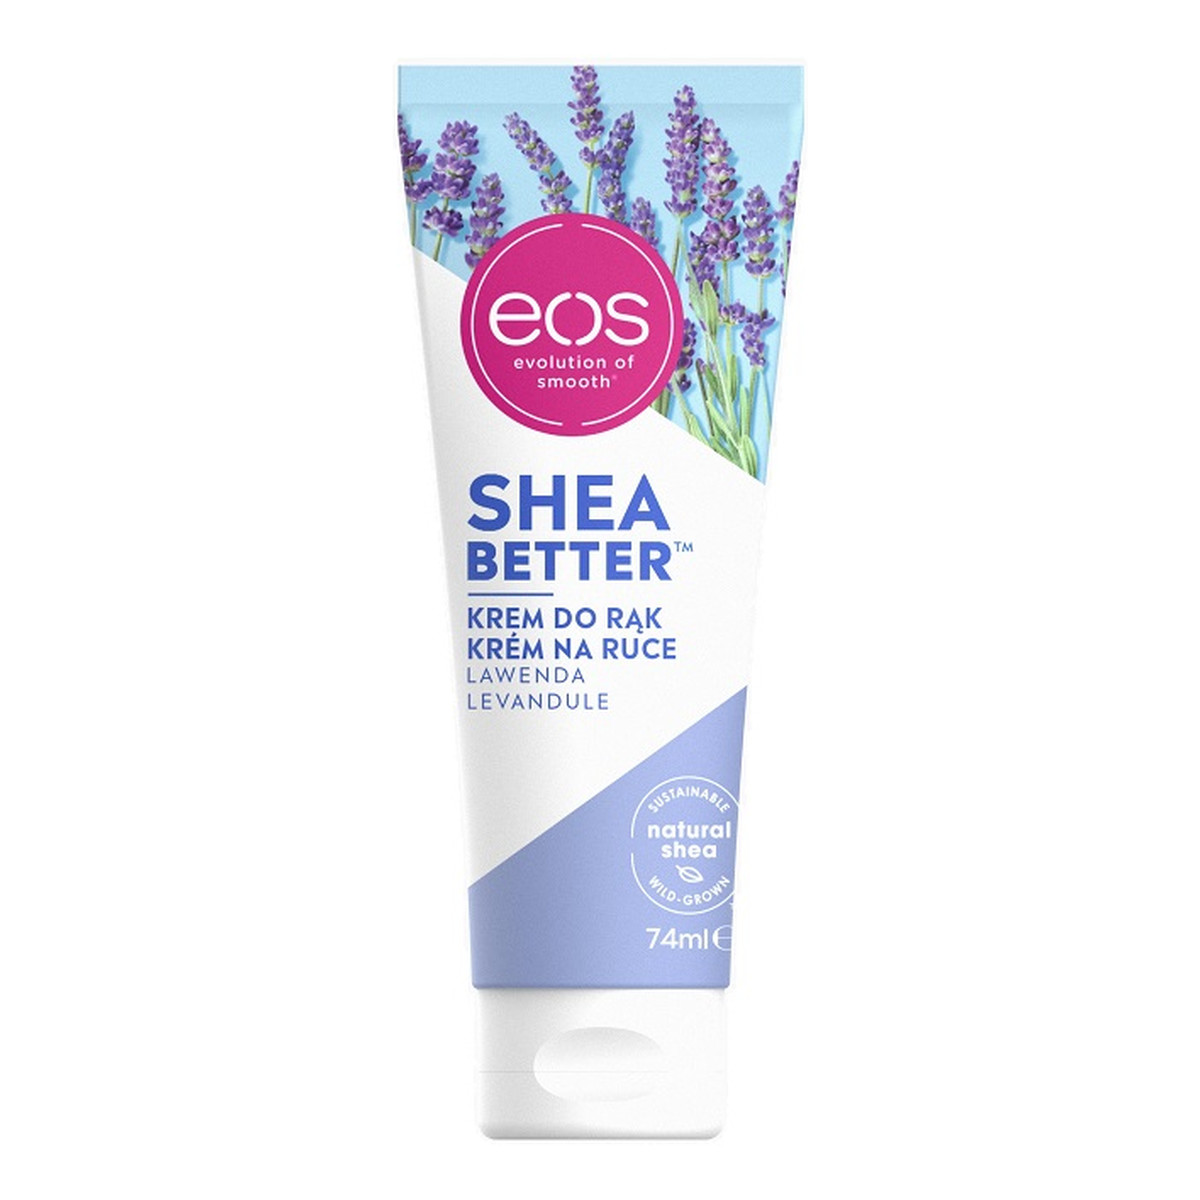 EOS Shea Better Hand Cream - Krem do rąk Lawenda 74ml